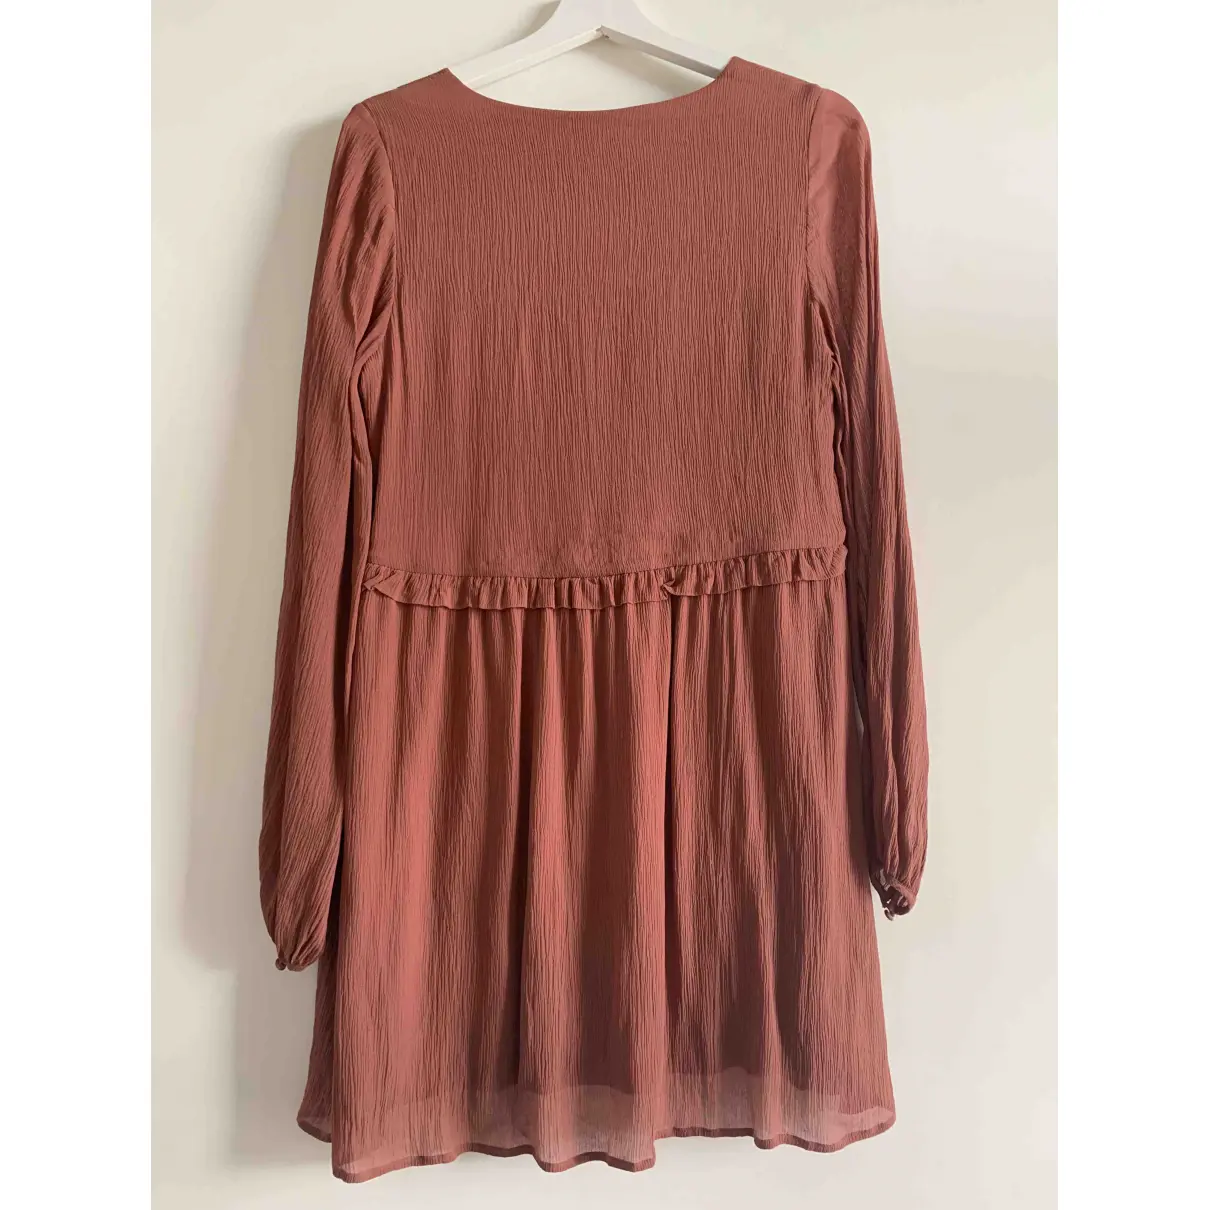 Buy Sézane Fall Winter 2019 silk mini dress online